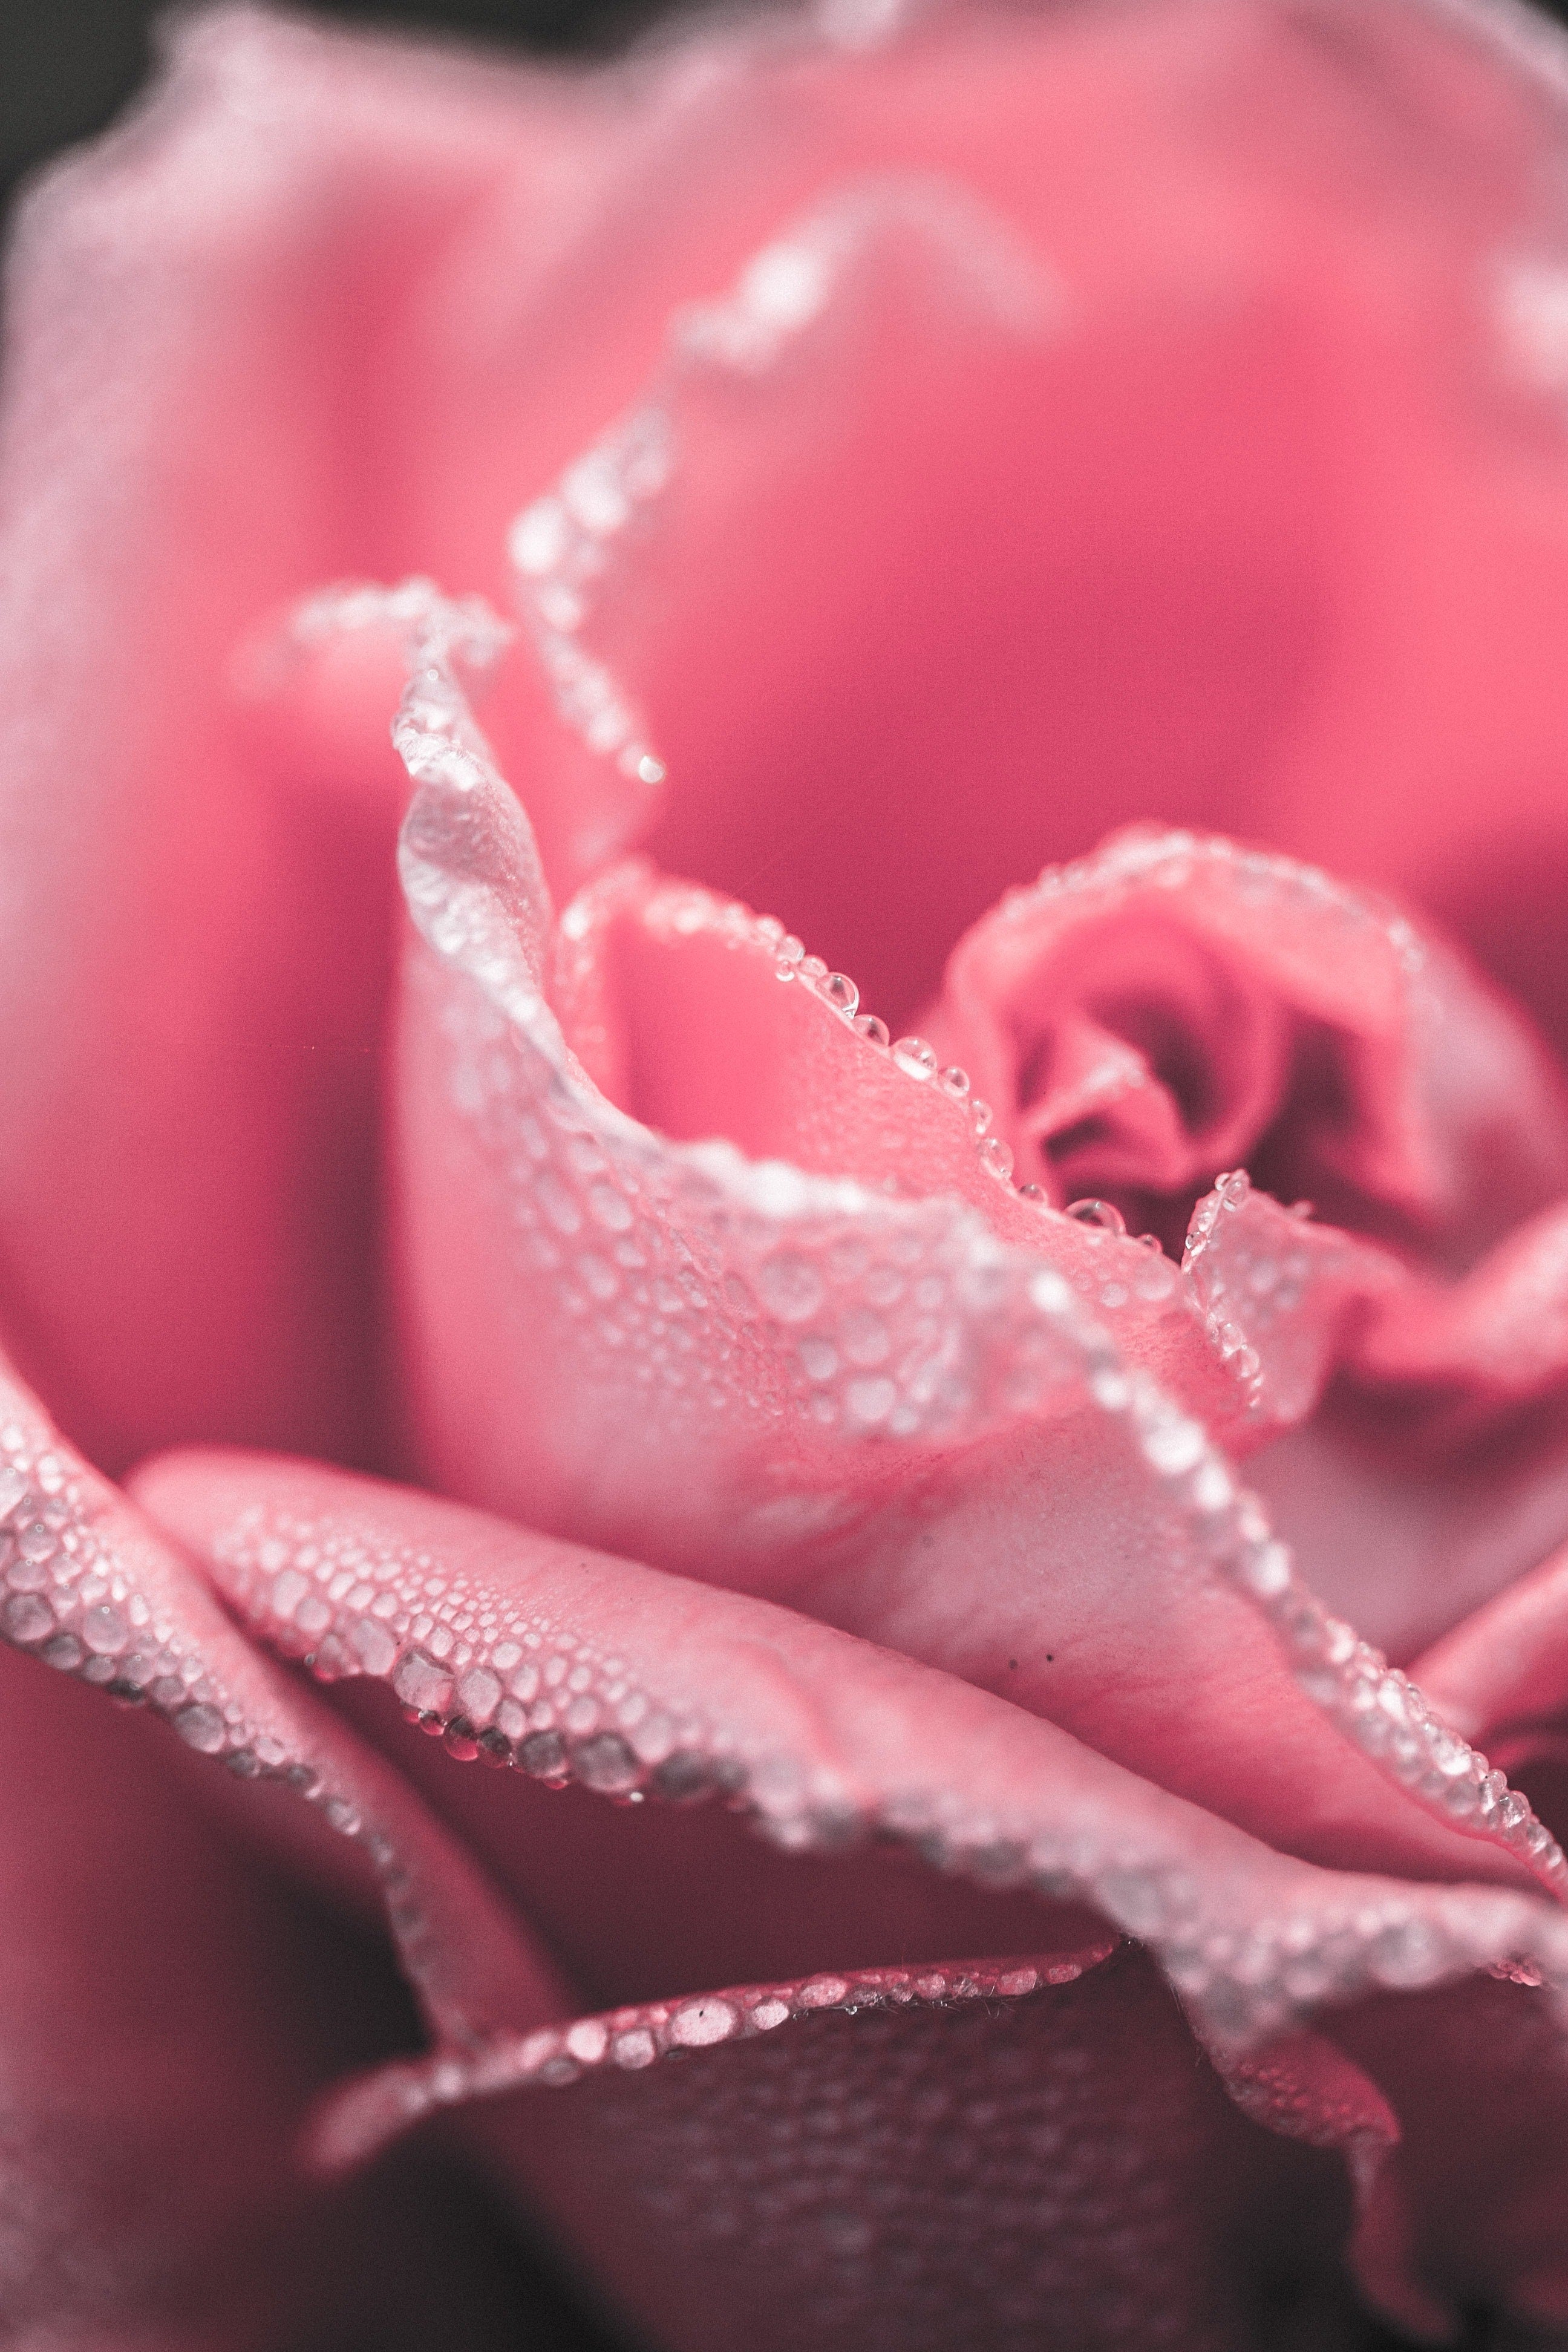 Rose Hydrosol: Nature's Gentle and Versatile Skin Care Elixir